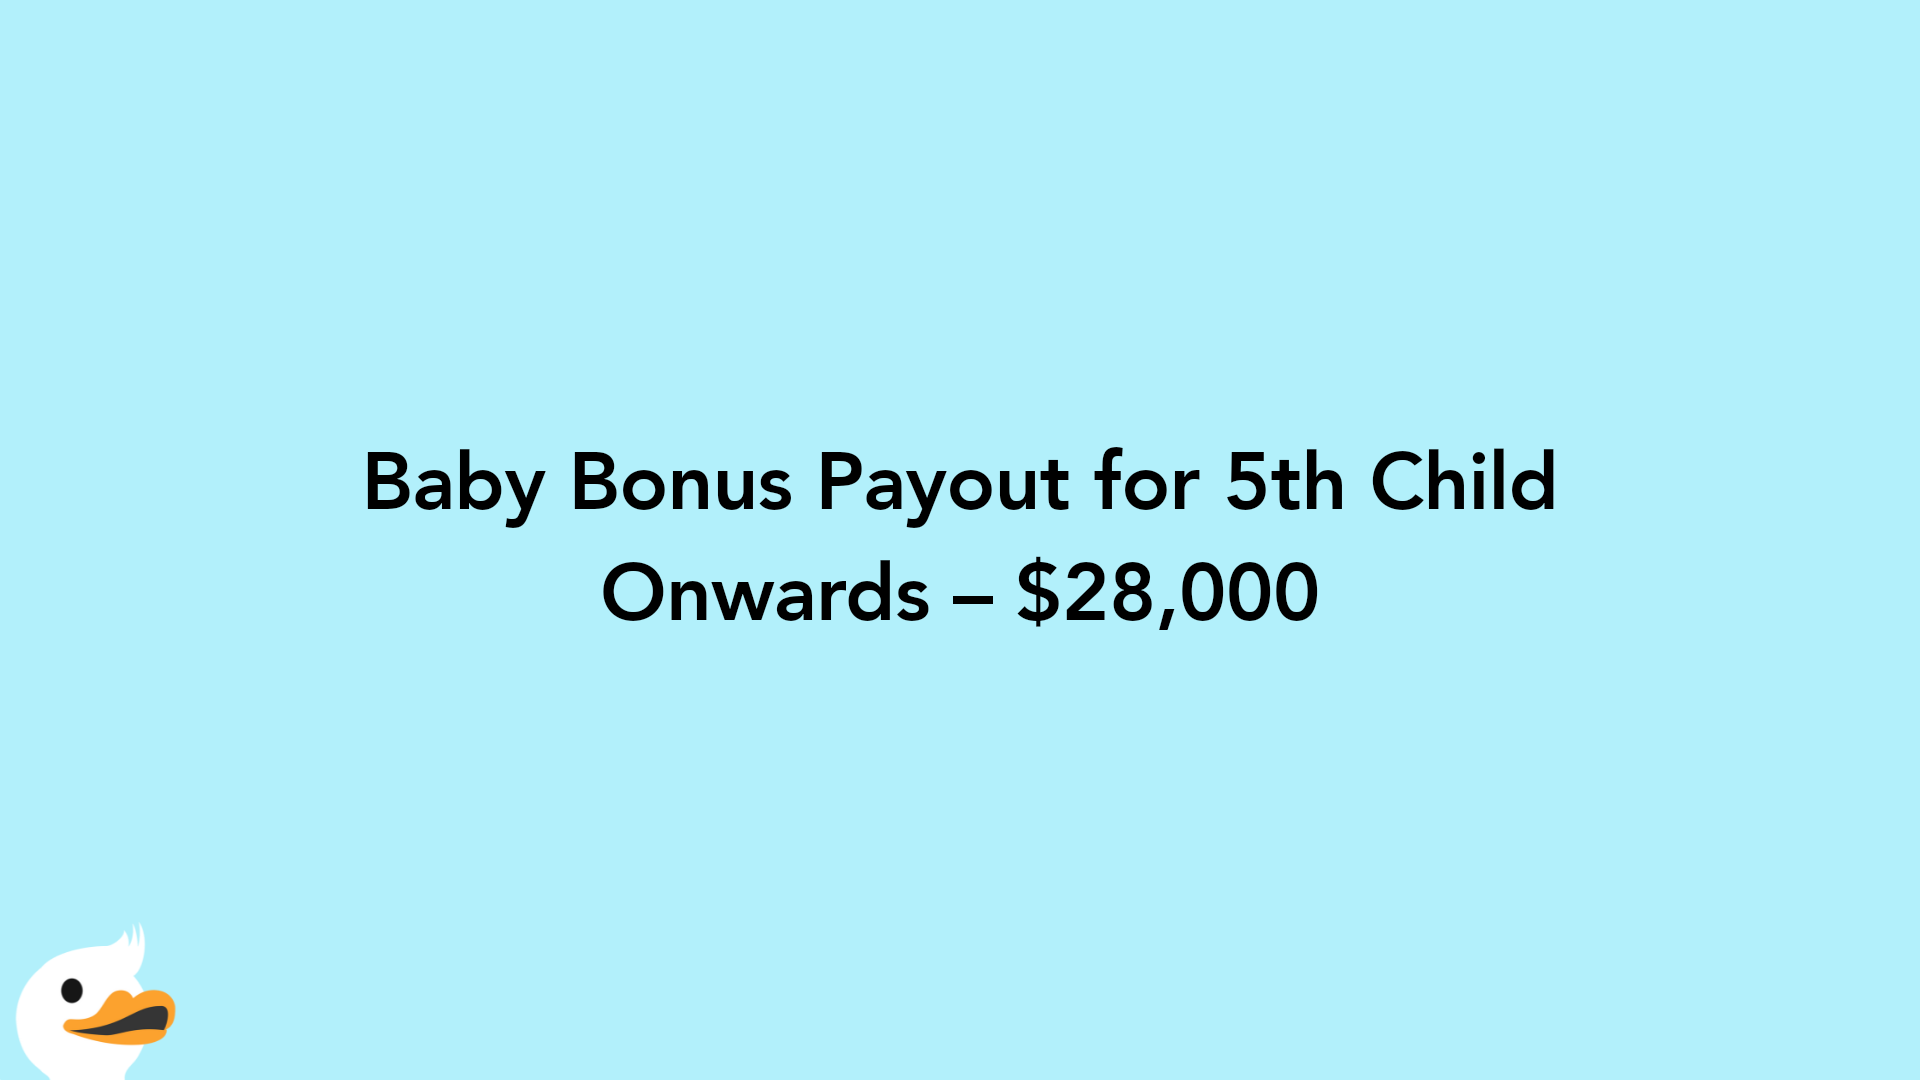 Baby Bonus Payout for 5th Child Onwards – $28,000